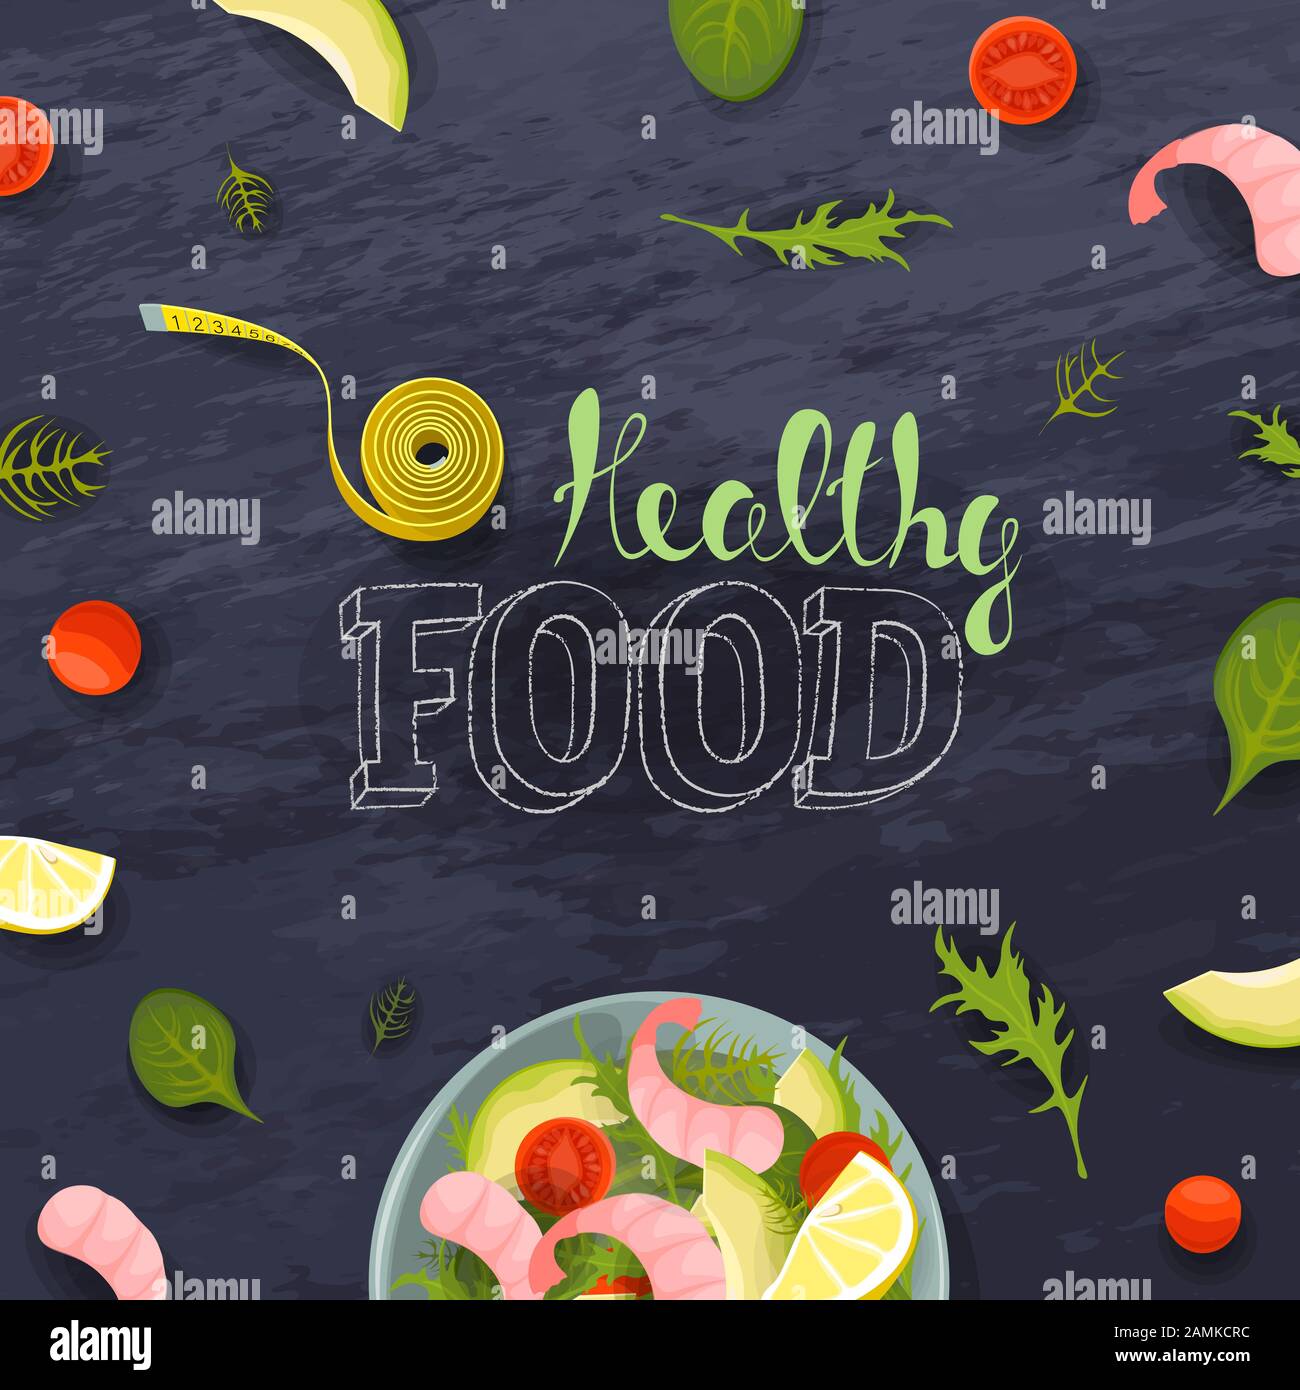 Gemüse und Garnelen frische Salatschüssel Draufsicht. Fitness-Ration Diät-Messband. Tomaten, Avocado, Salat auf Kreidegrund. Beschriftung Stock Vektor